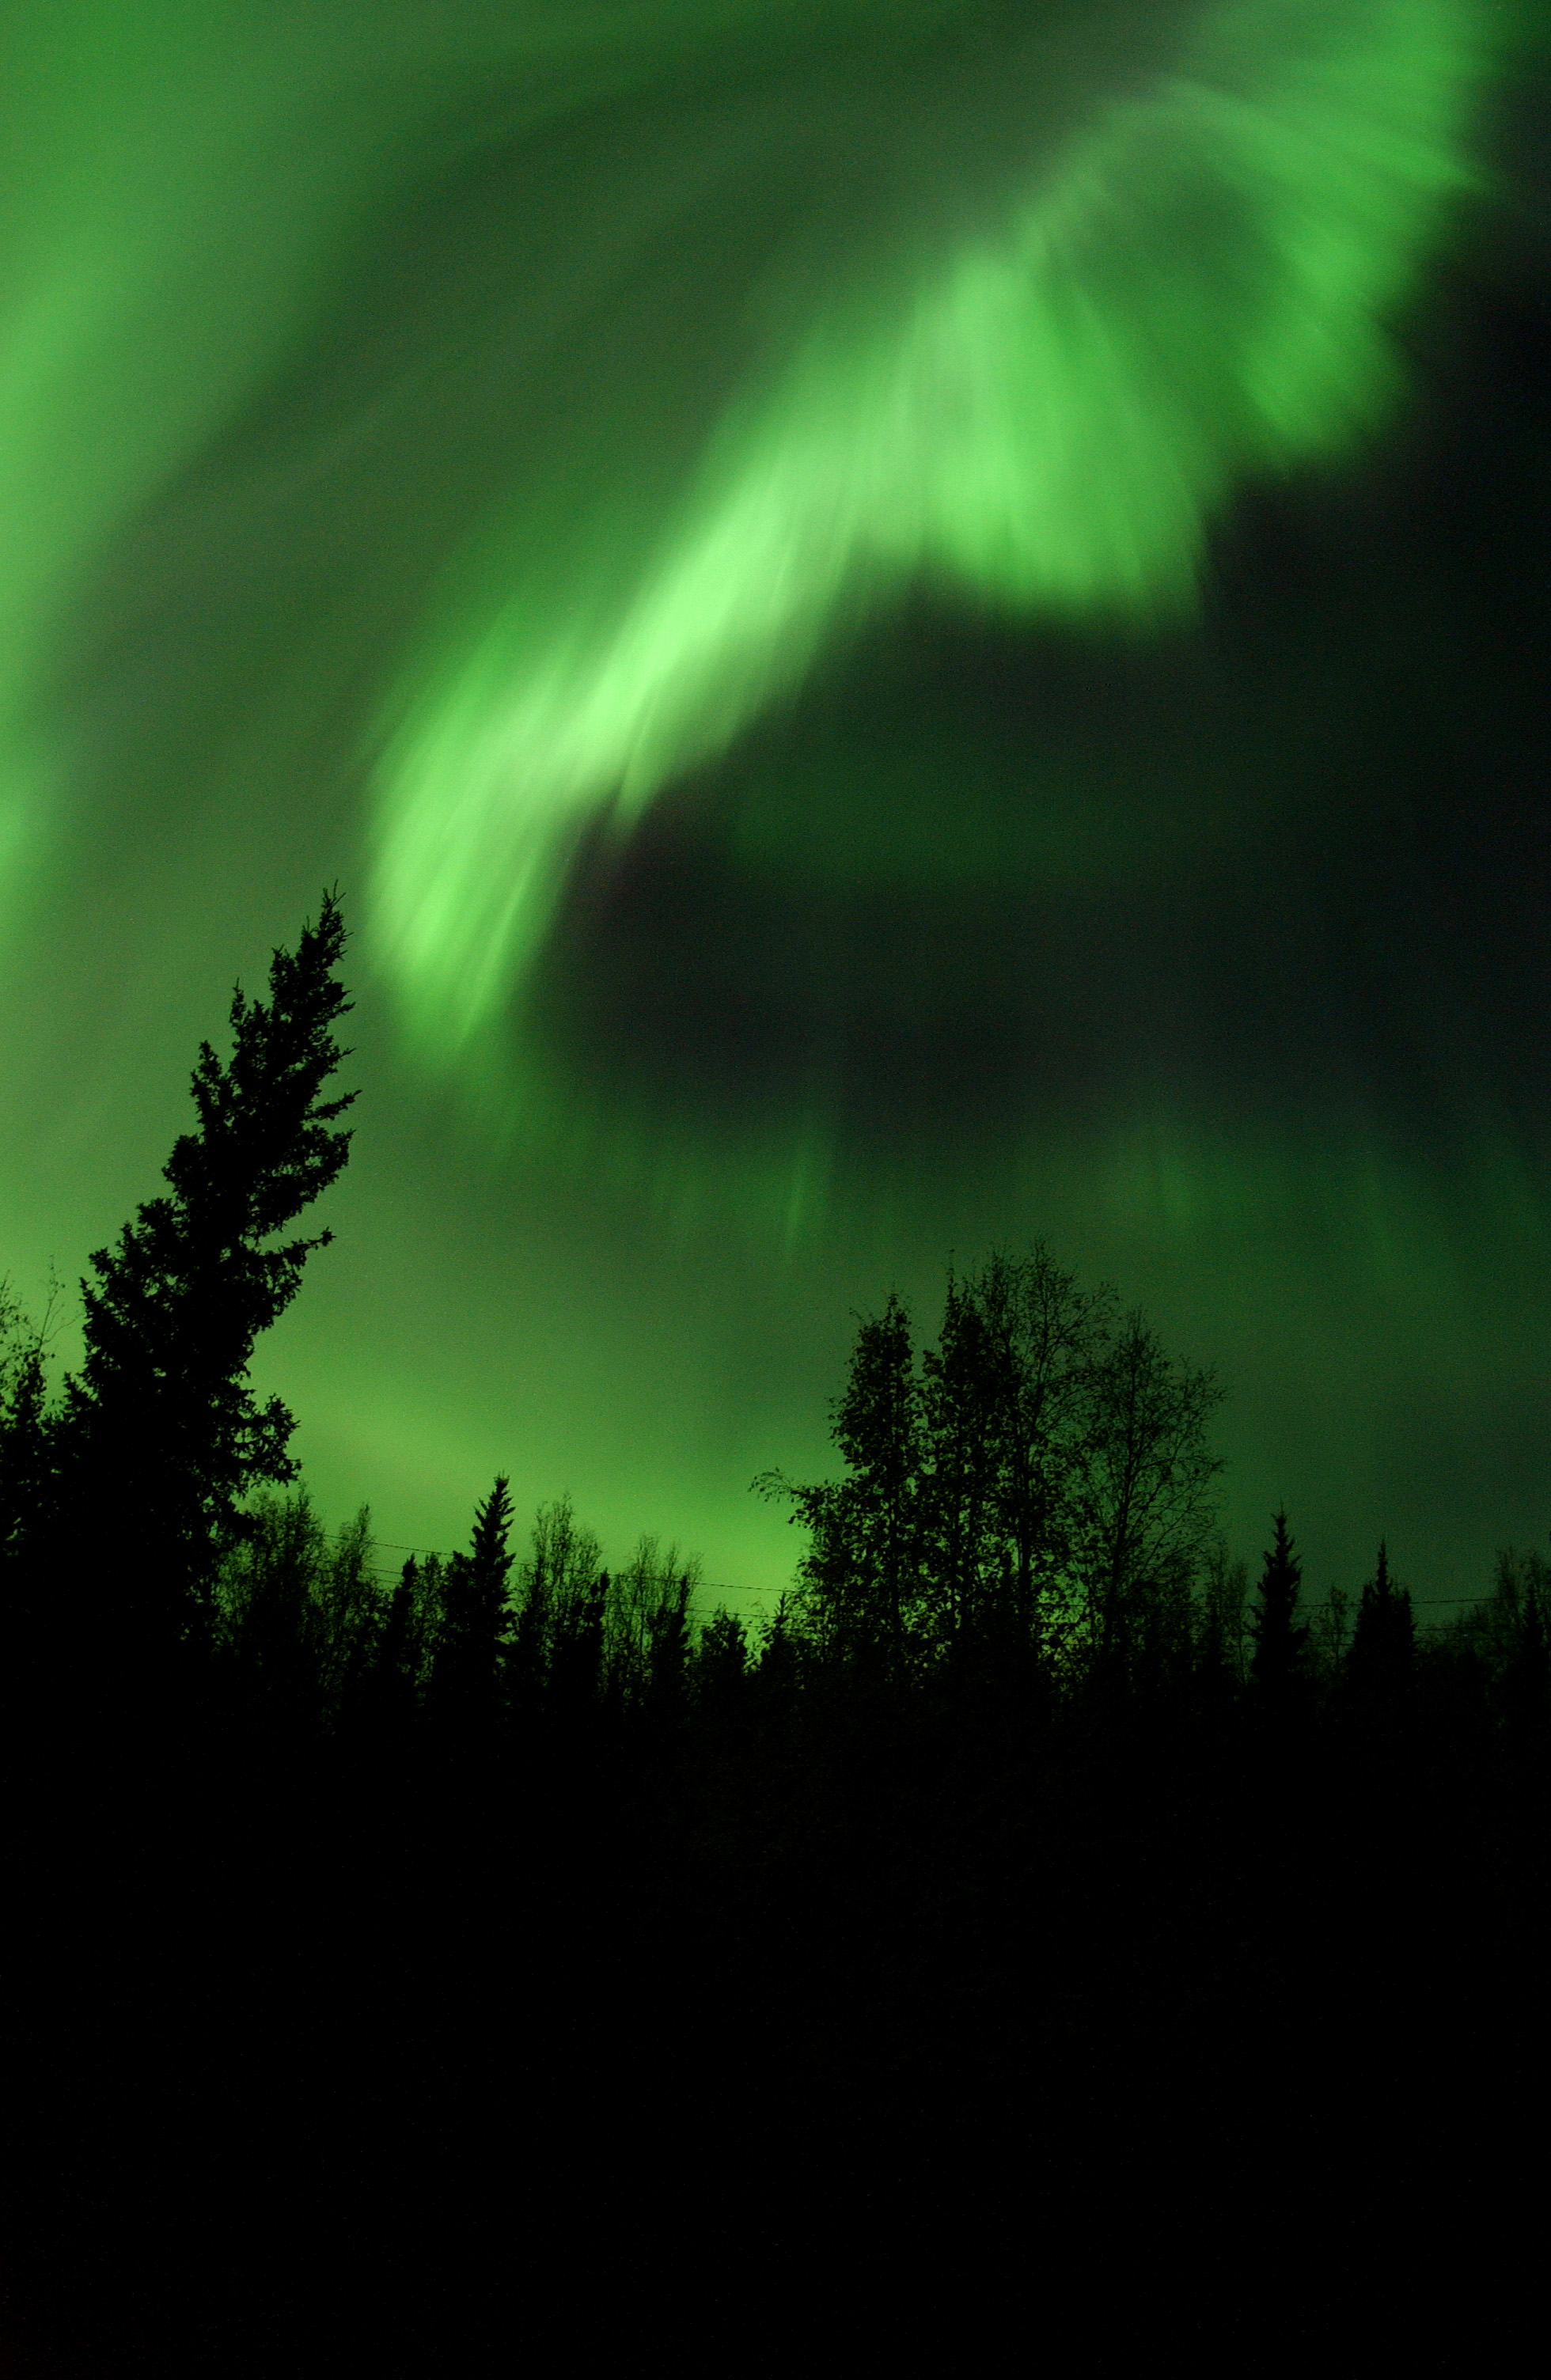 File:The Aurora Borealis or Northern Lights shine above Bear Lake in Alaska  050910-F-MS415-023.jpg - Wikimedia Commons